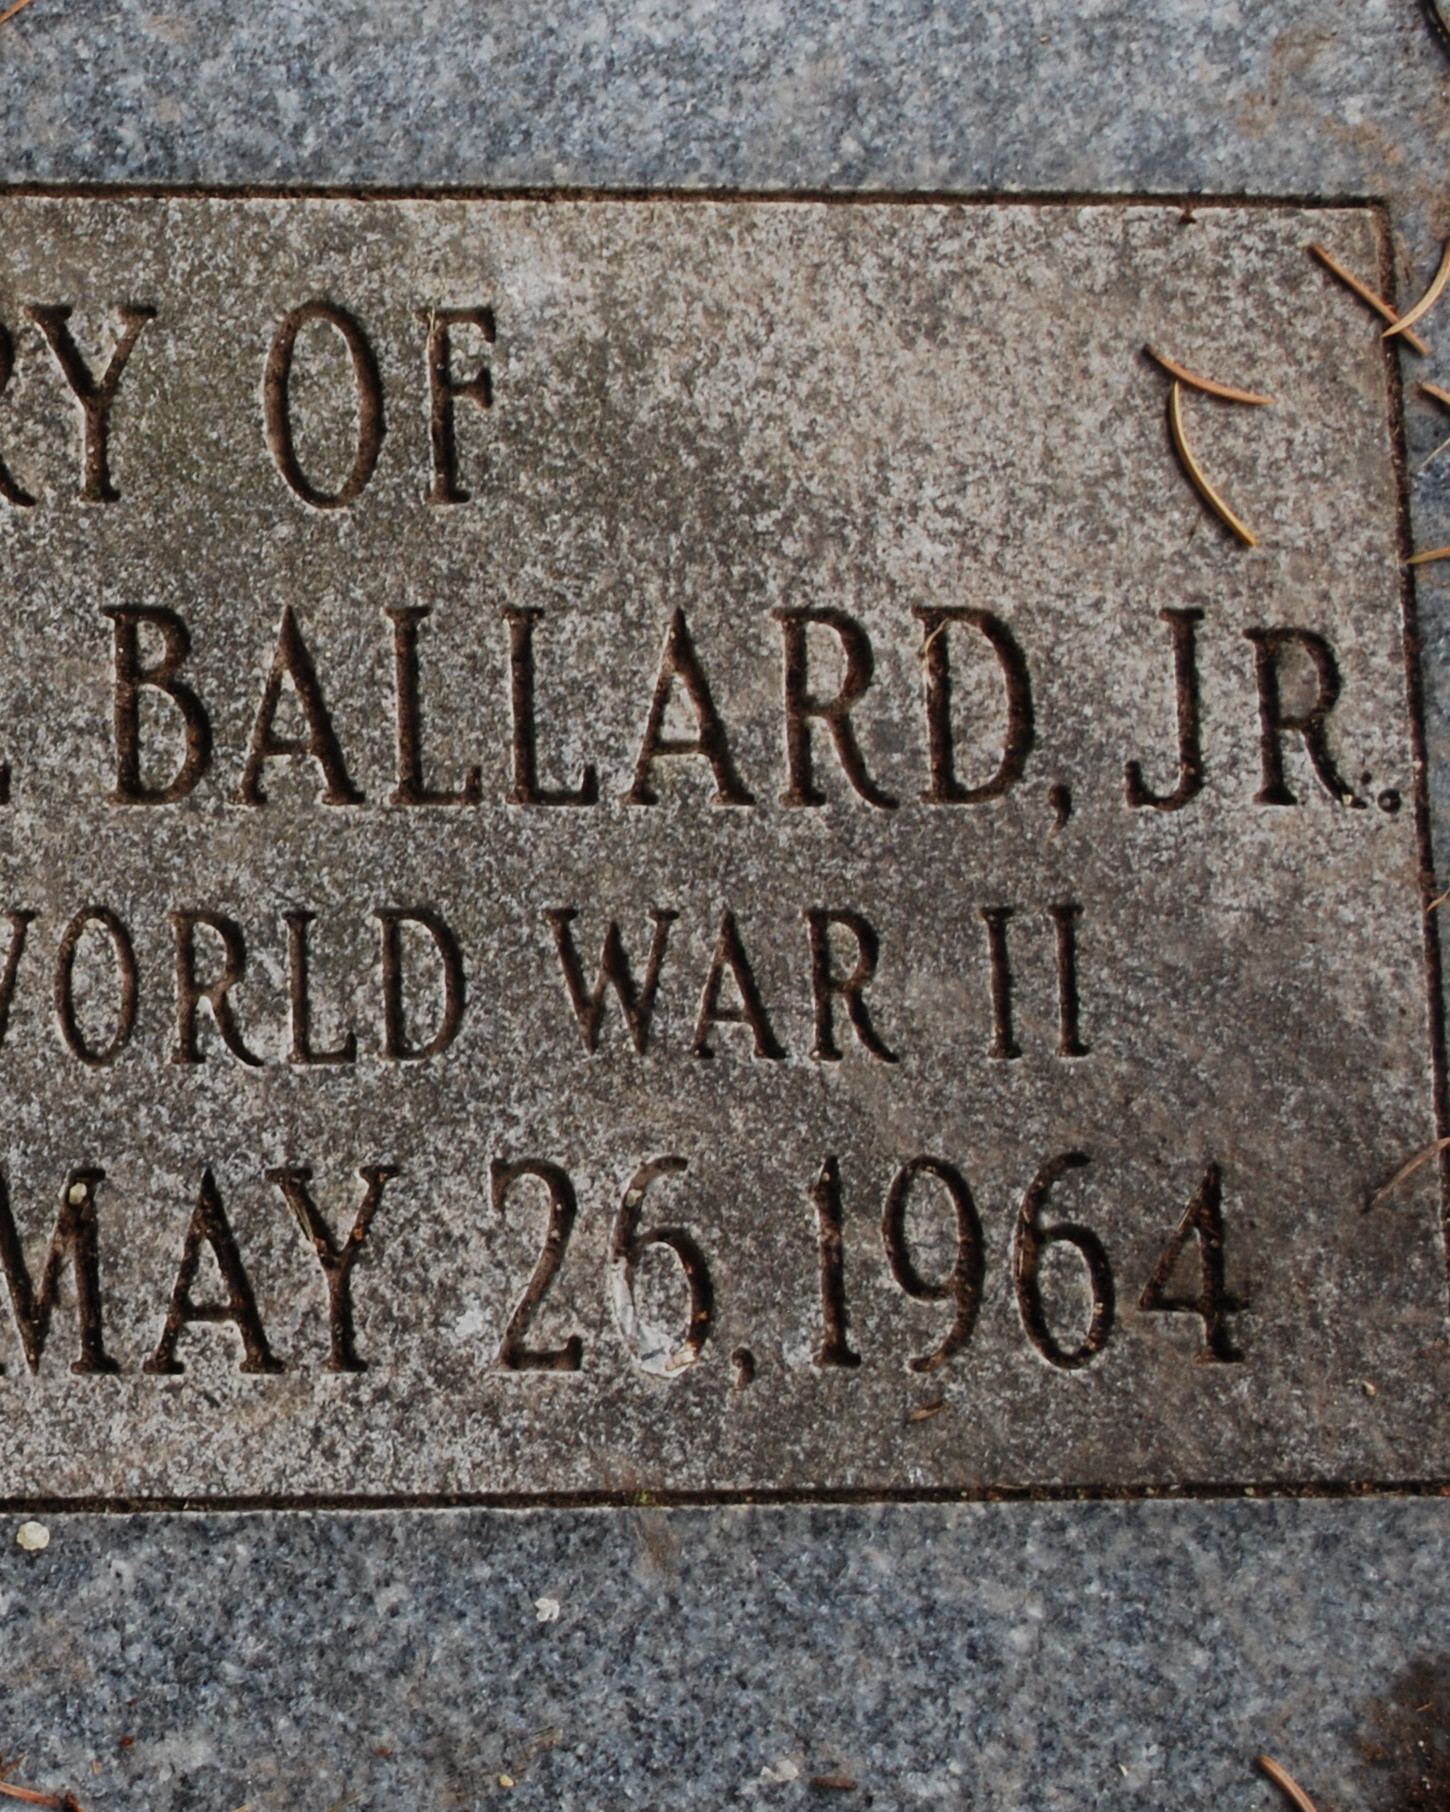 Sergeant Willard R. Ballard | Los Angeles County Sheriff's Department, California